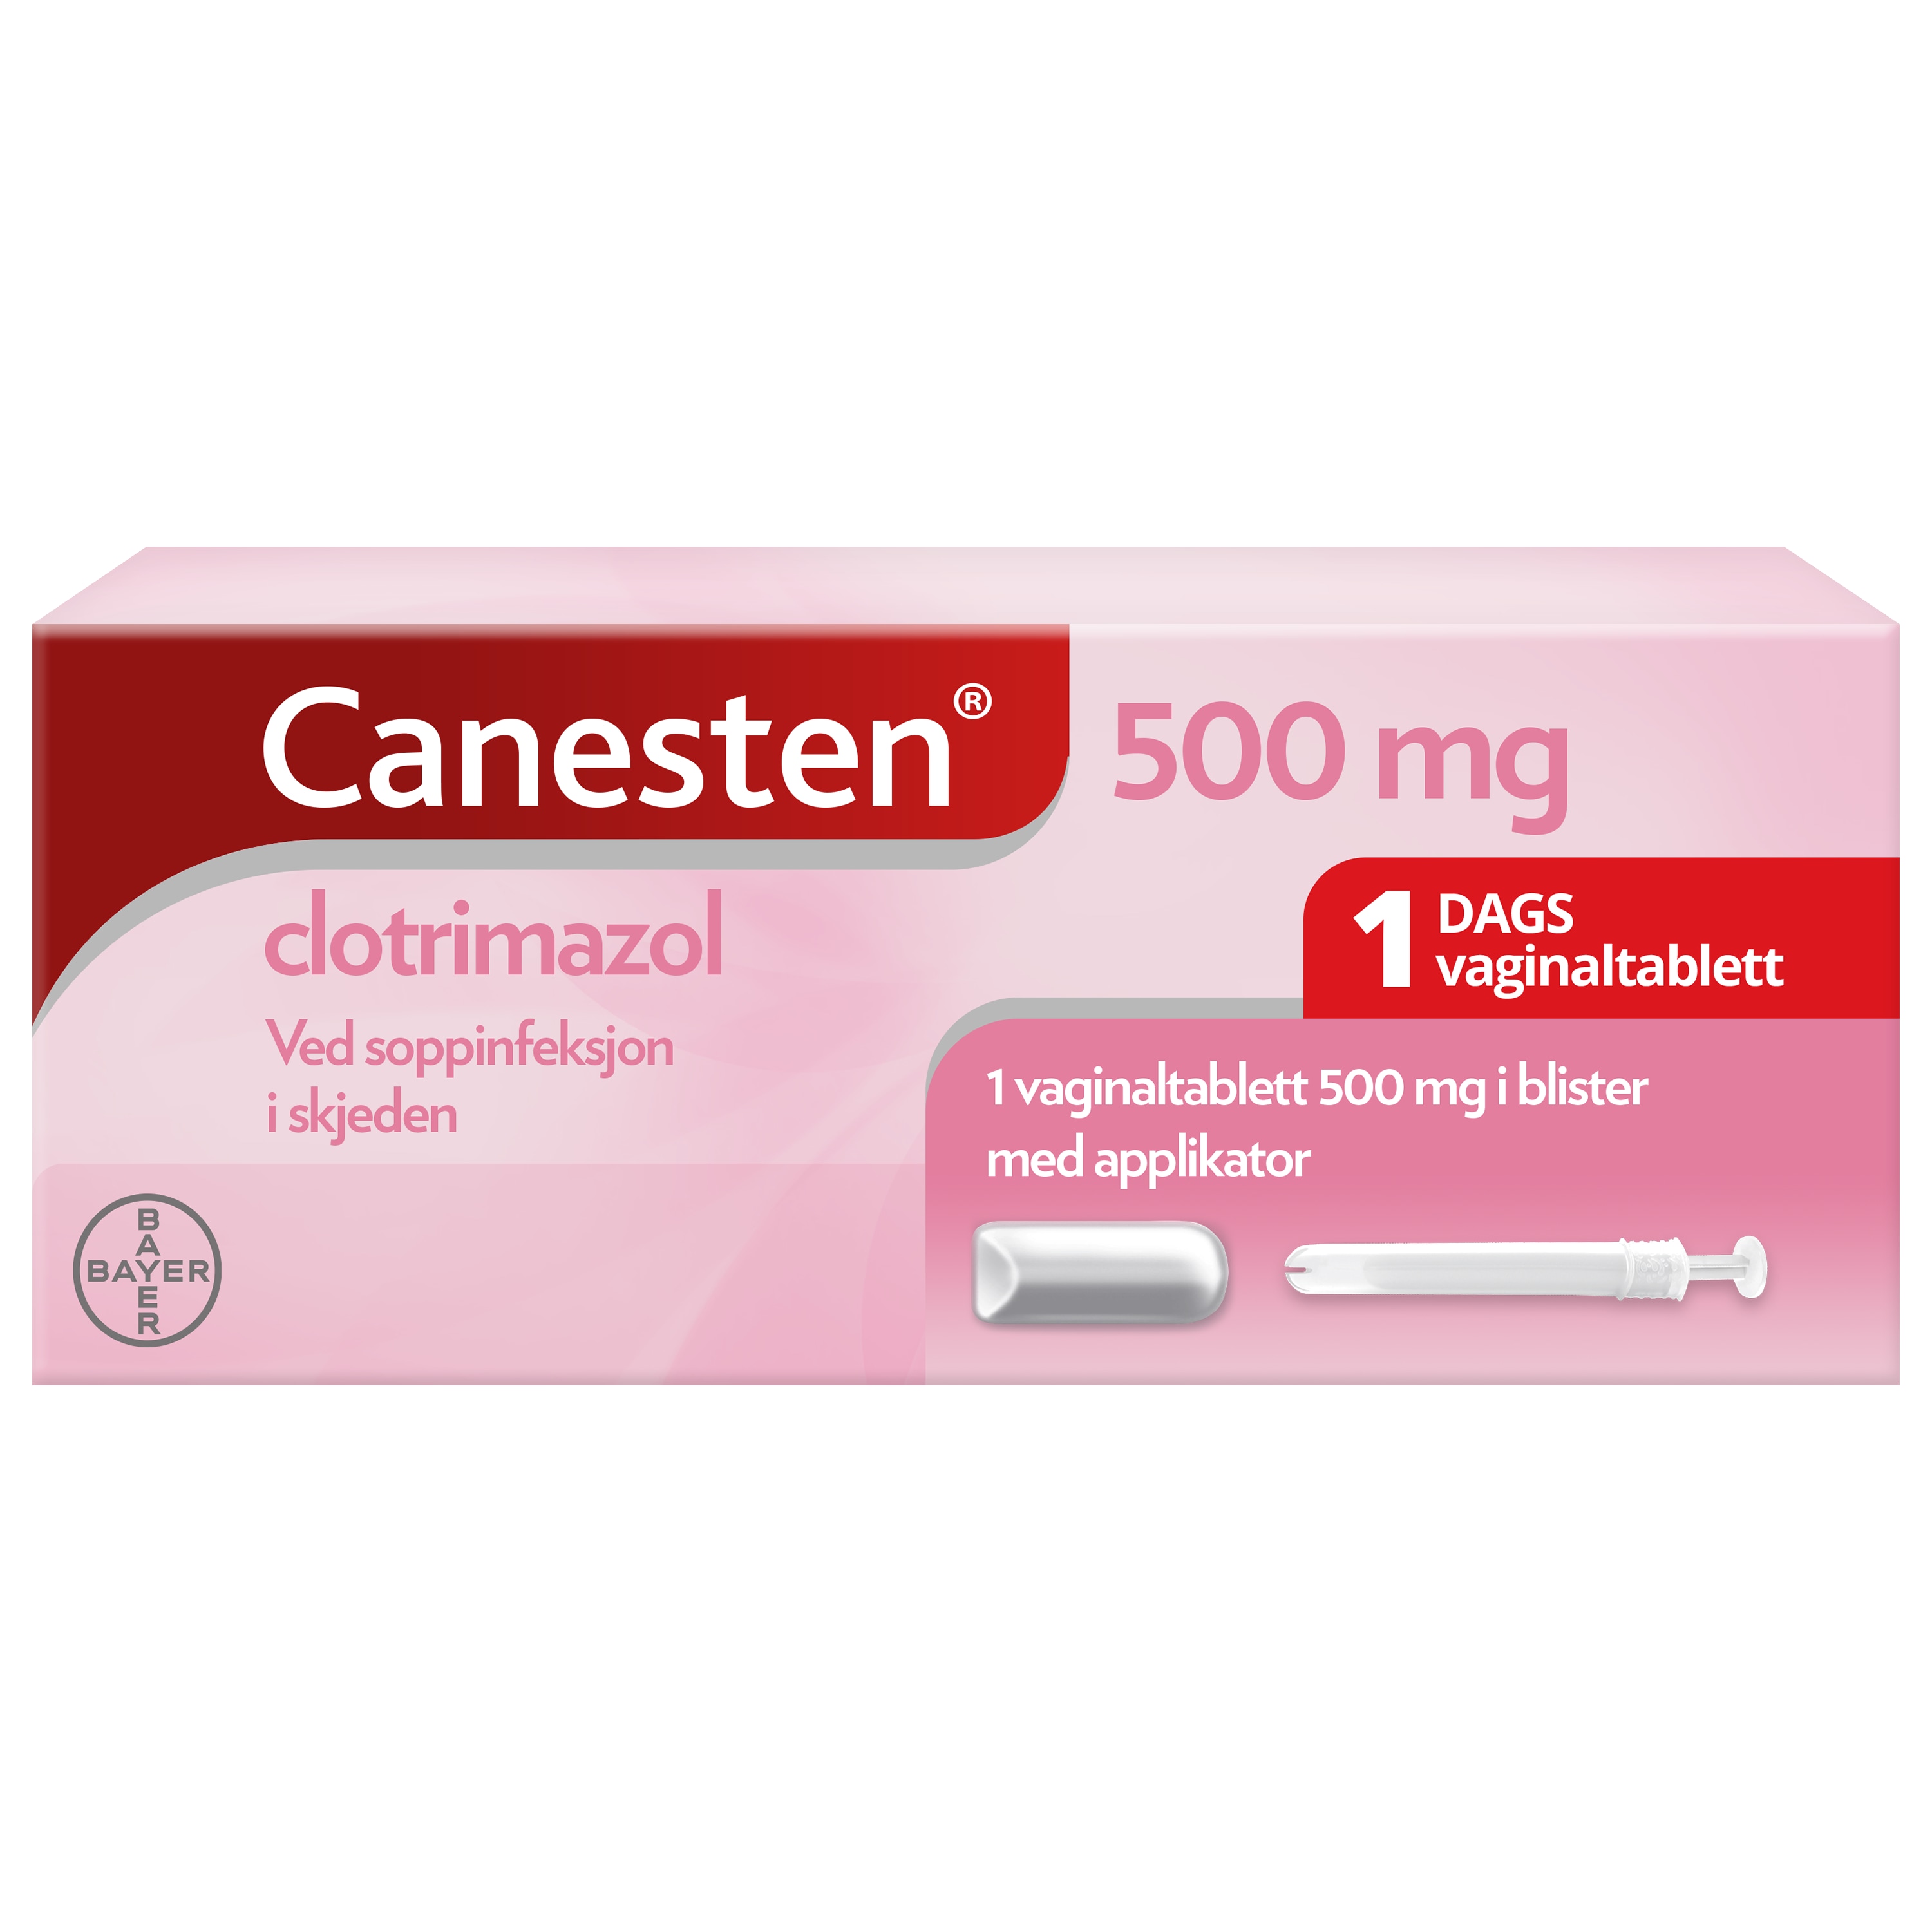 2020 Canesten 500 mg 1 Day Vag Tab Ecomm PDP PI SPS PSD NO.png